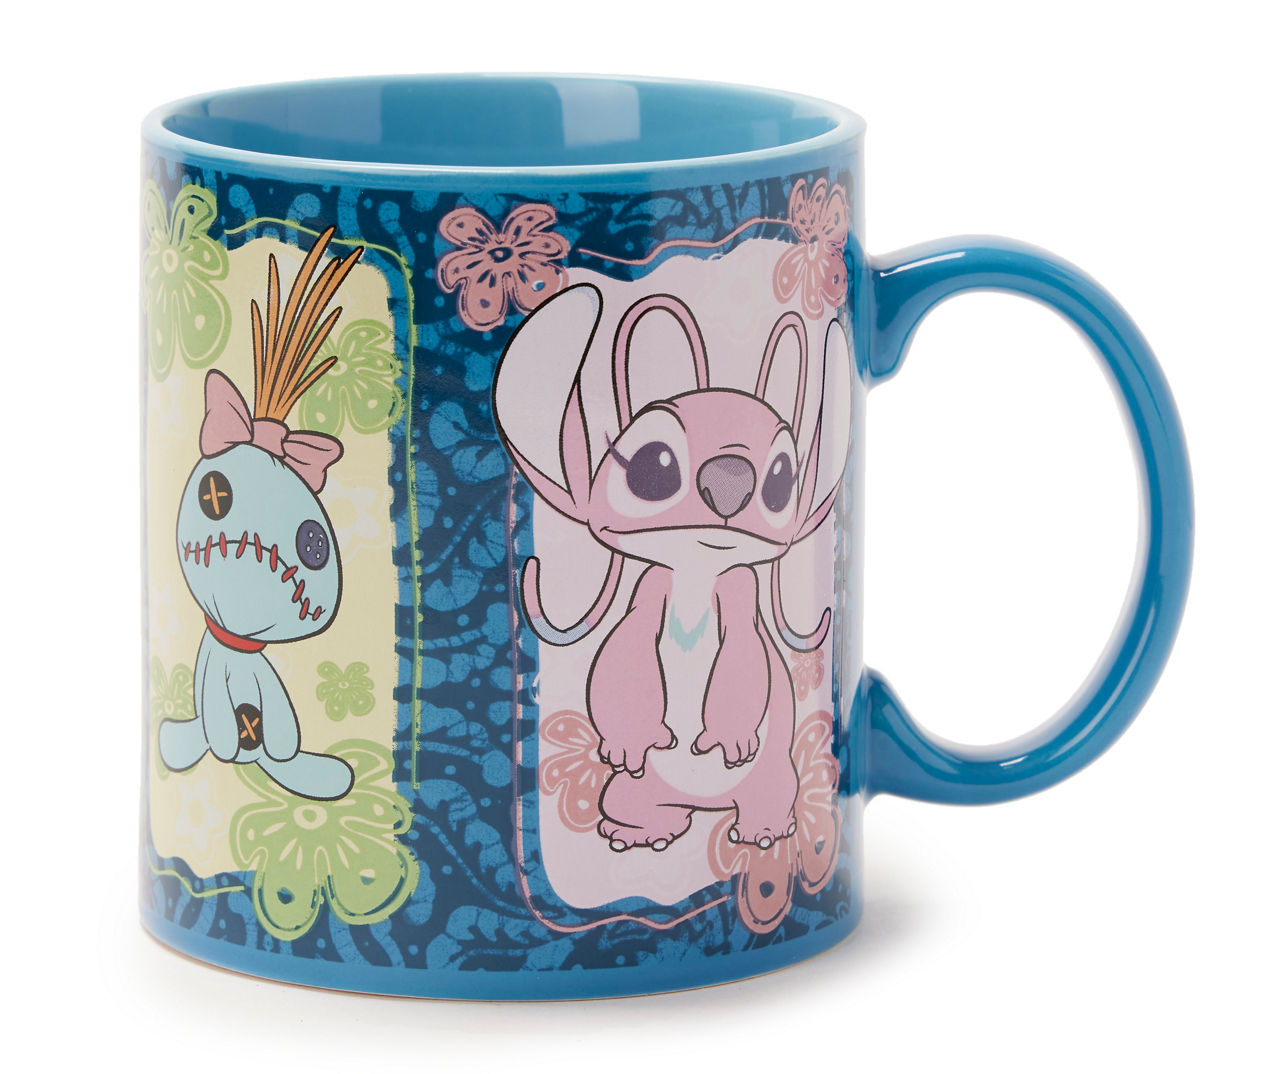 Tasse à Café Stitch - Mug Disney Lilo & Stitch